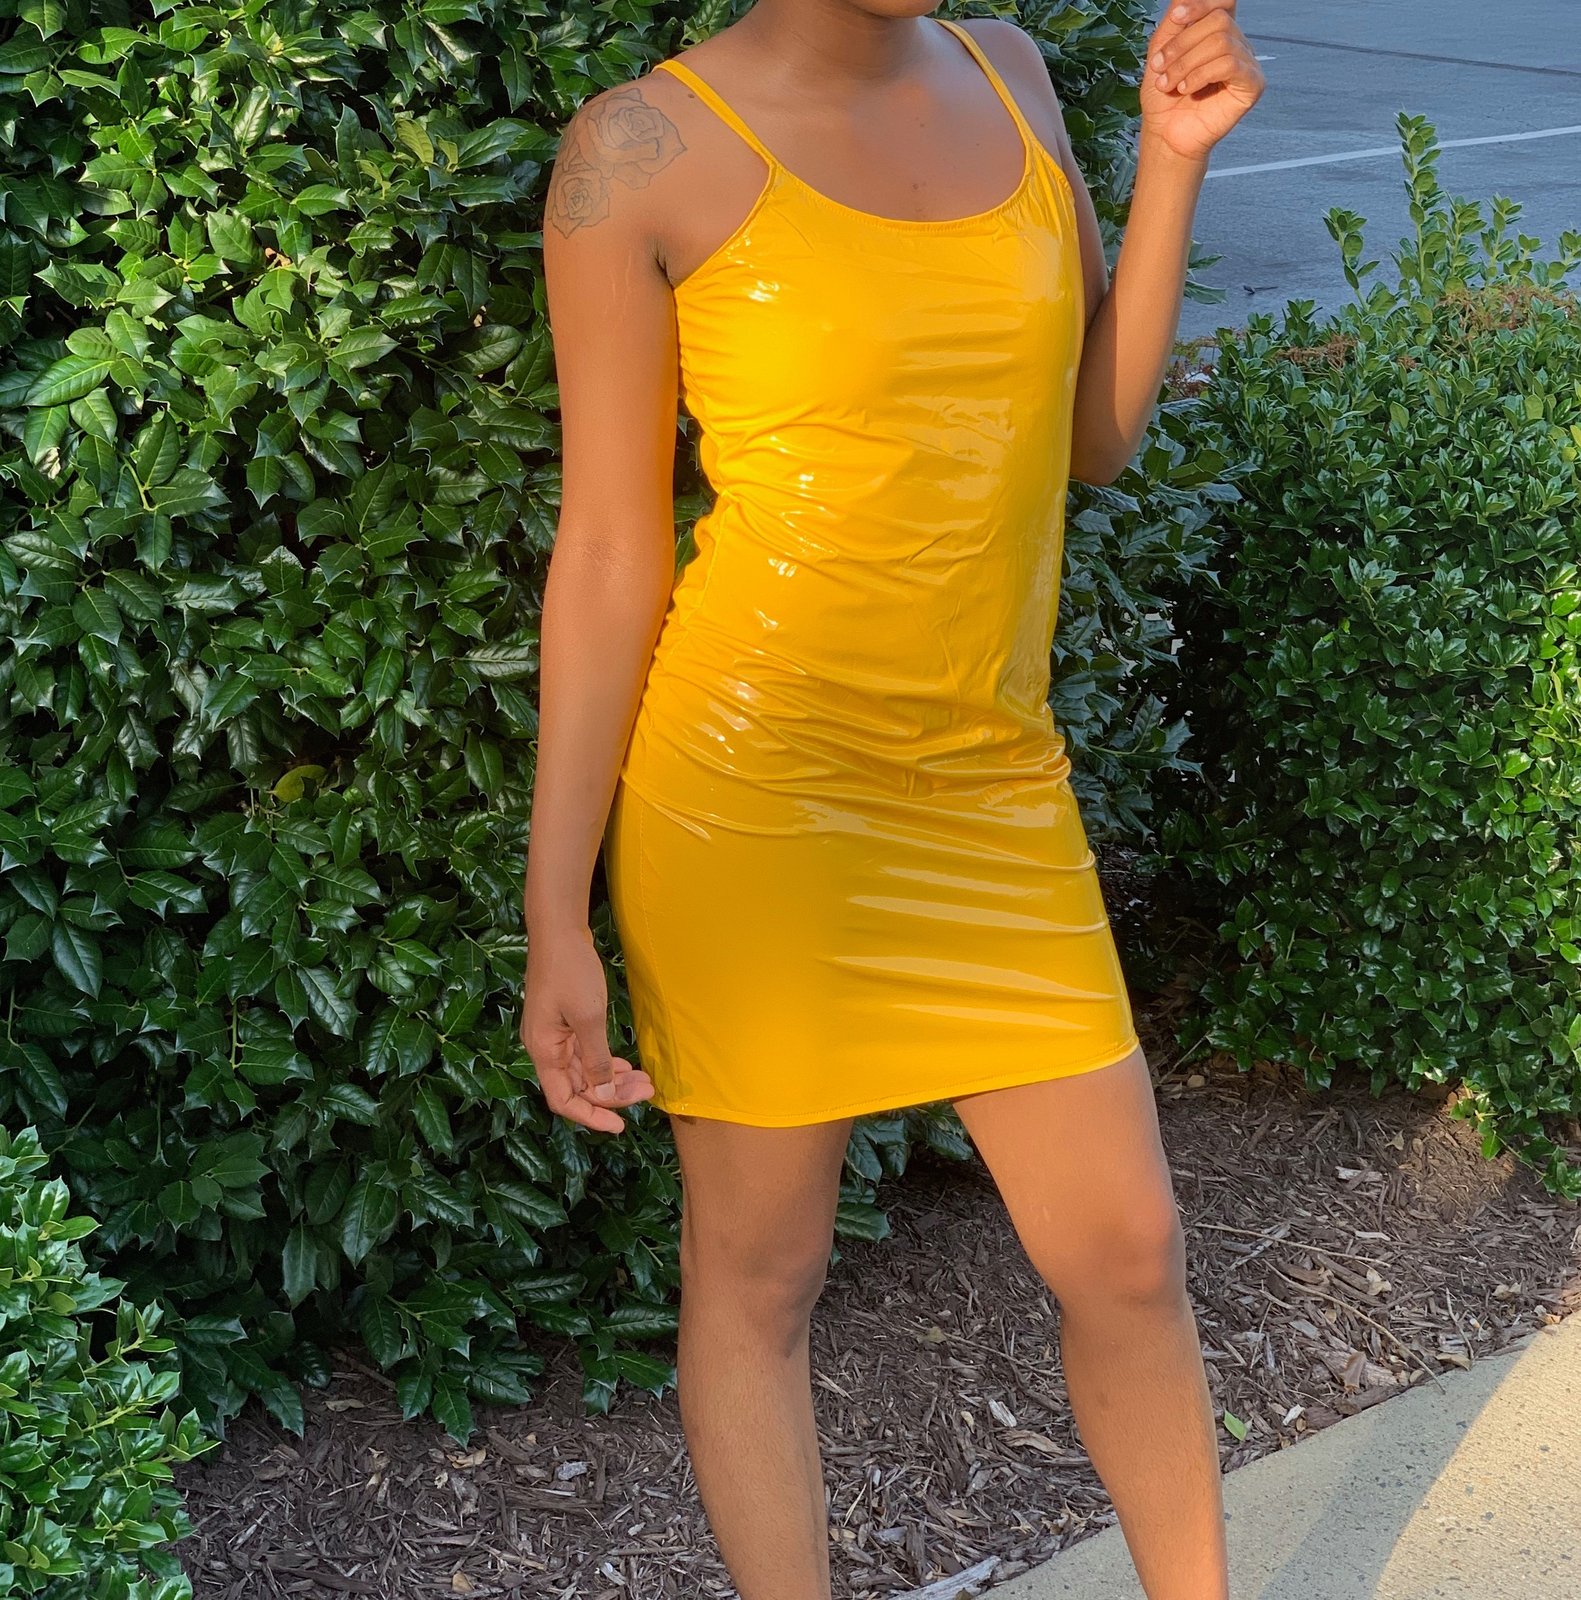 yellow latex dress